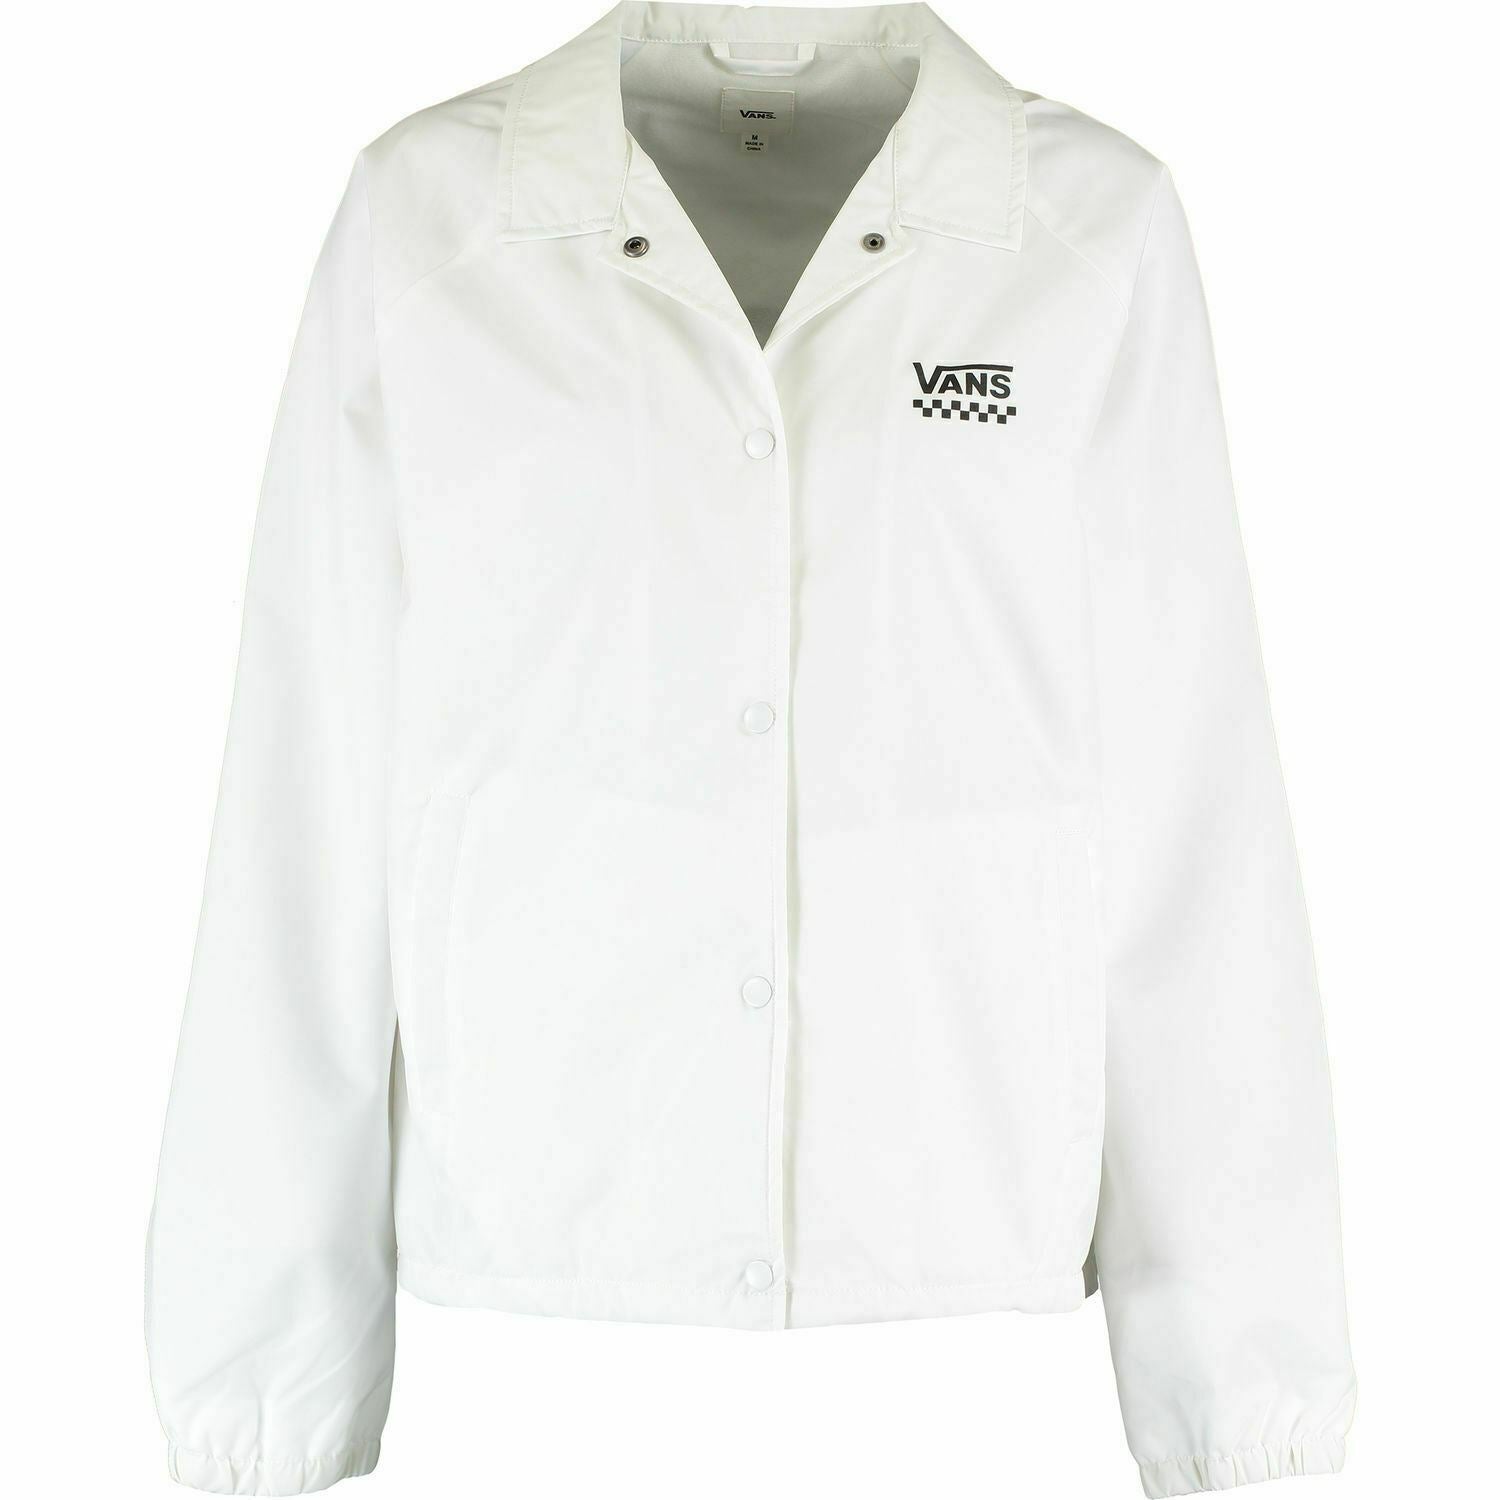 VANS Women's White Logo Print Jacket , size Small